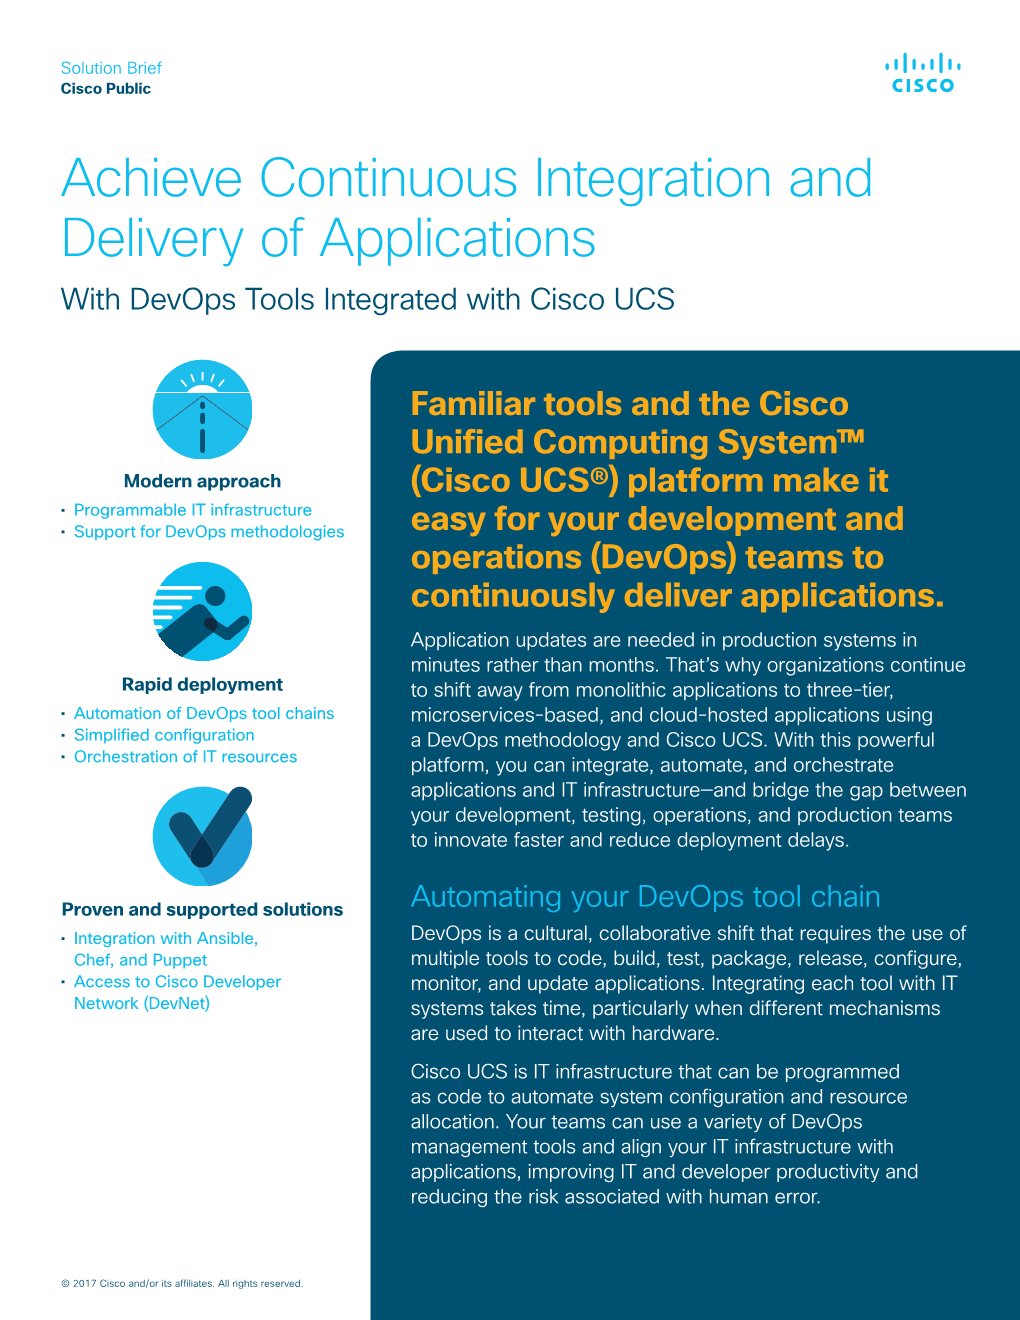 Devops Tools Integration with Cisco UCS Solution Brief